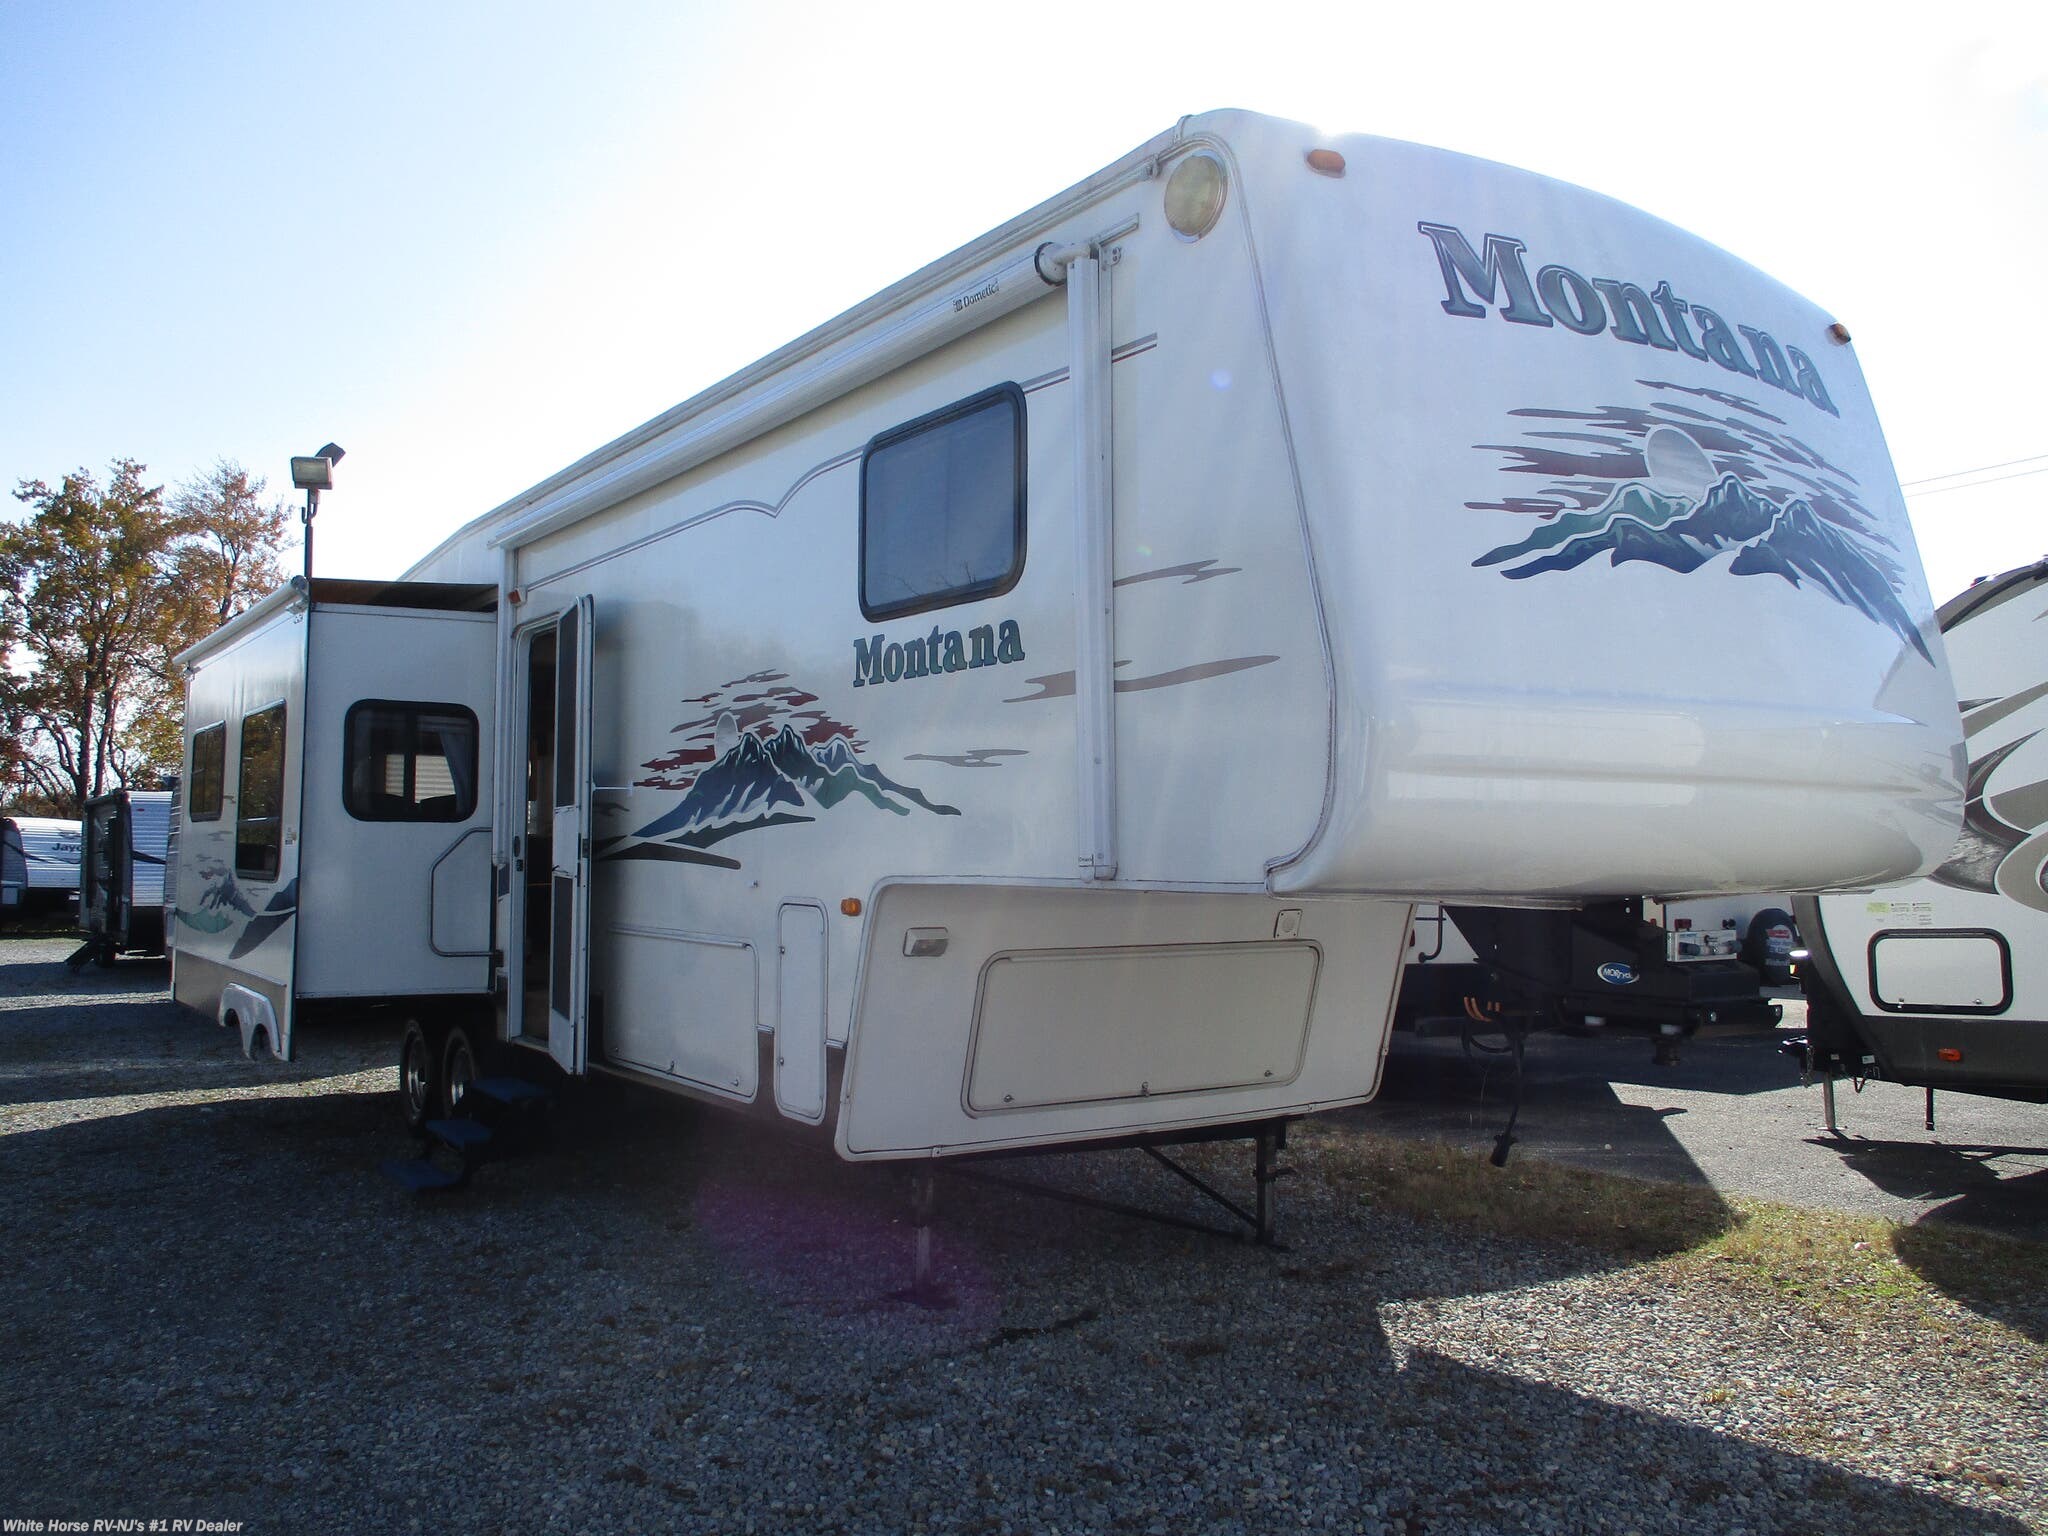 2003 montana travel trailer for sale